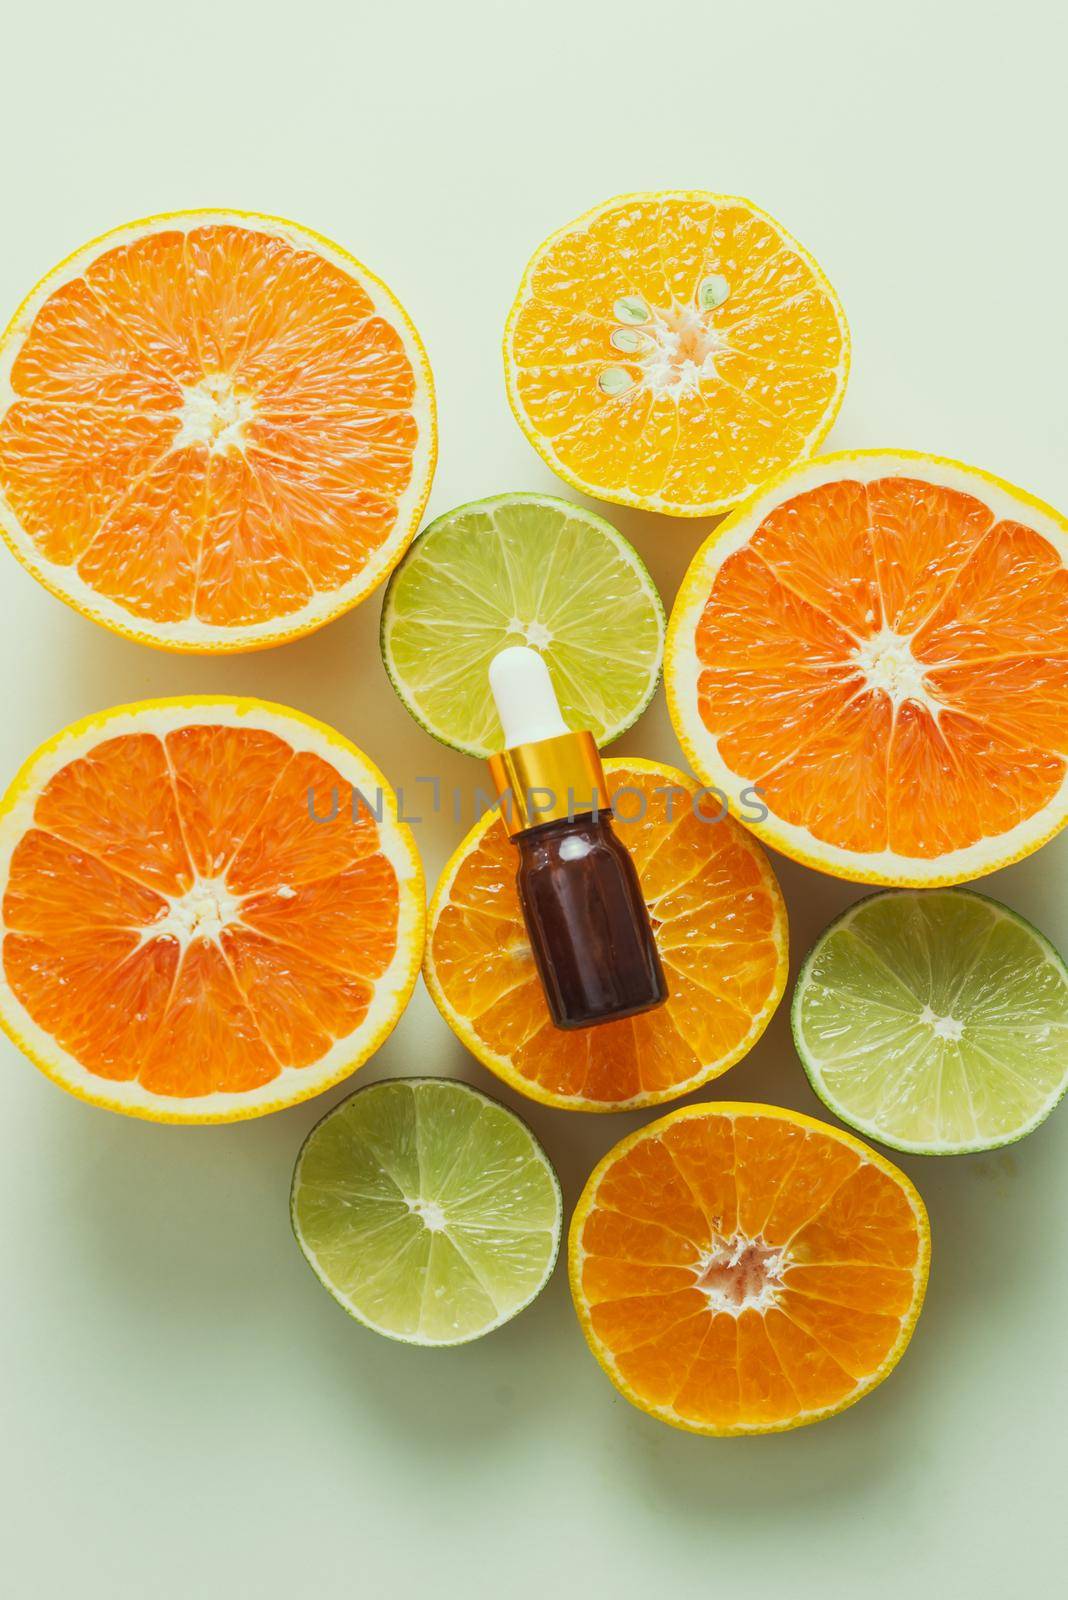 Brown Bottle with lemon, orange, tangerine and vitamin C. on white background.